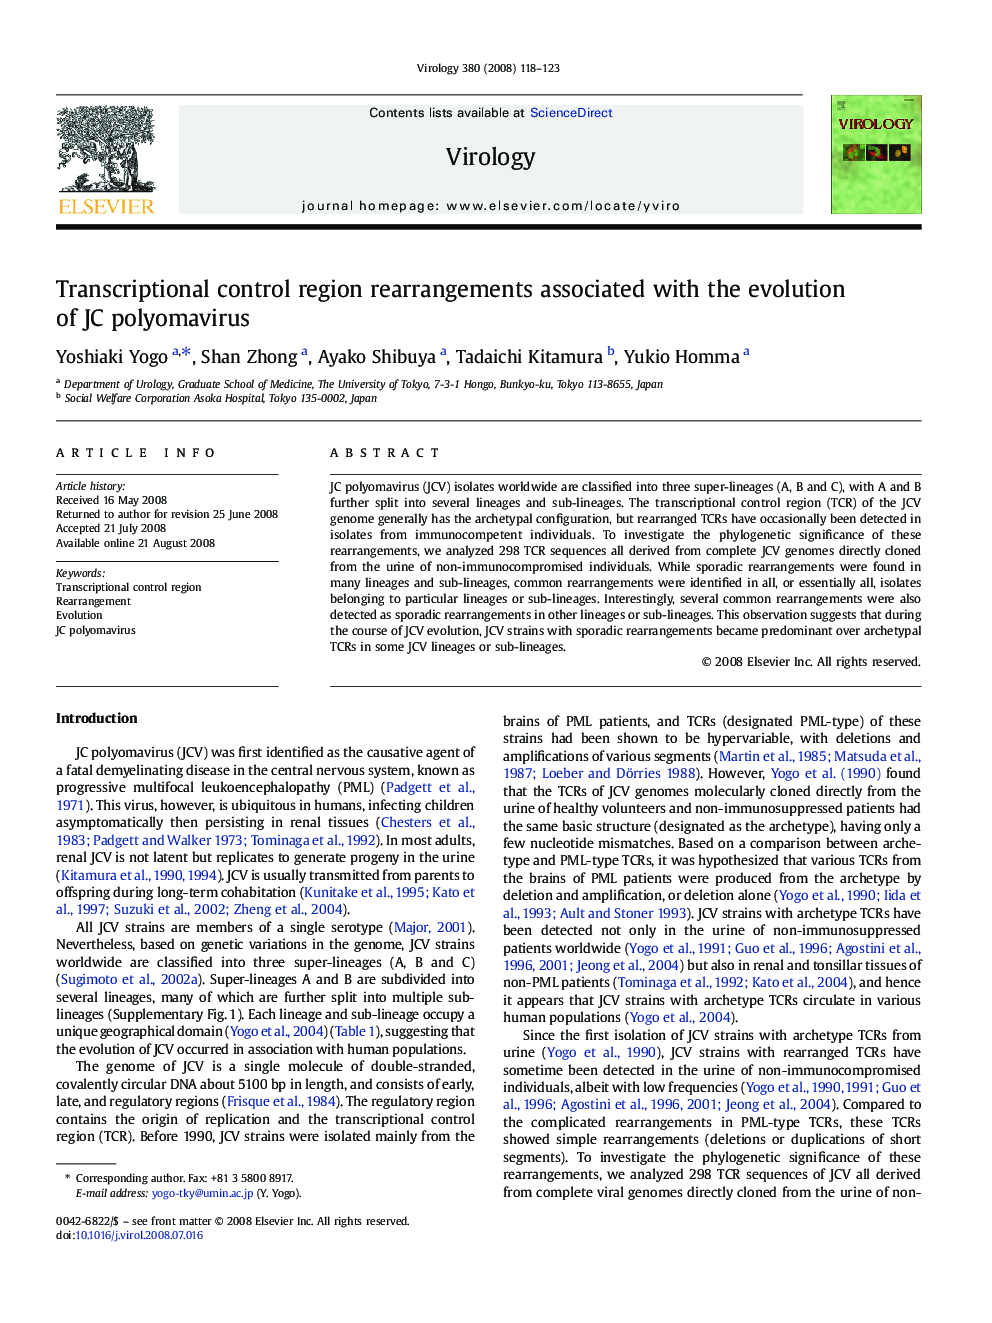 Transcriptional control region rearrangements associated with the evolution of JC polyomavirus